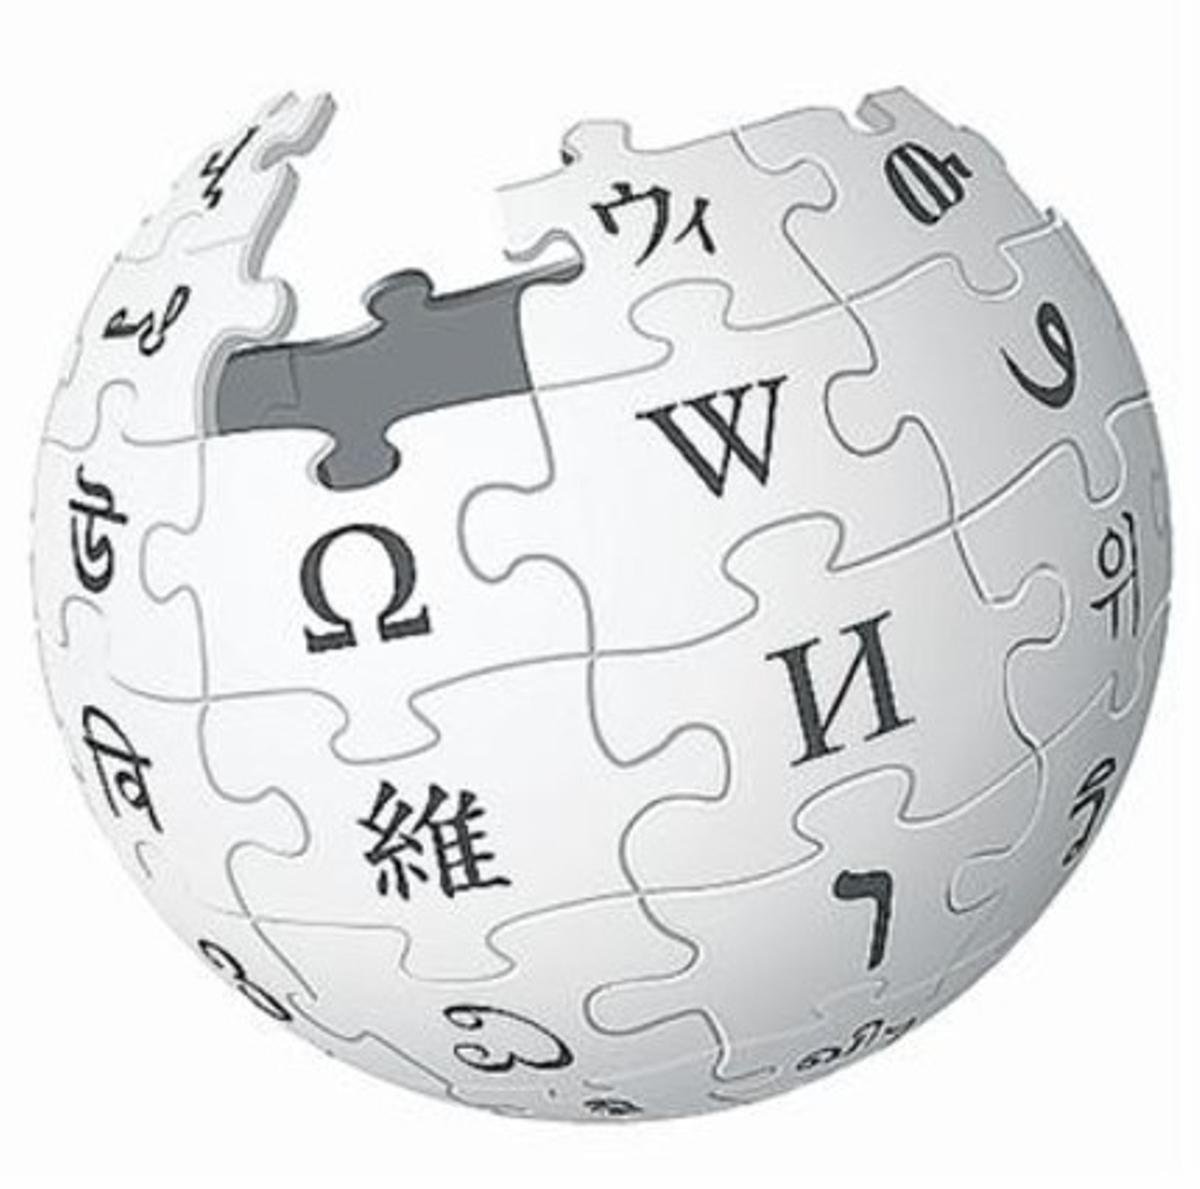 El logo de Wikipedia.